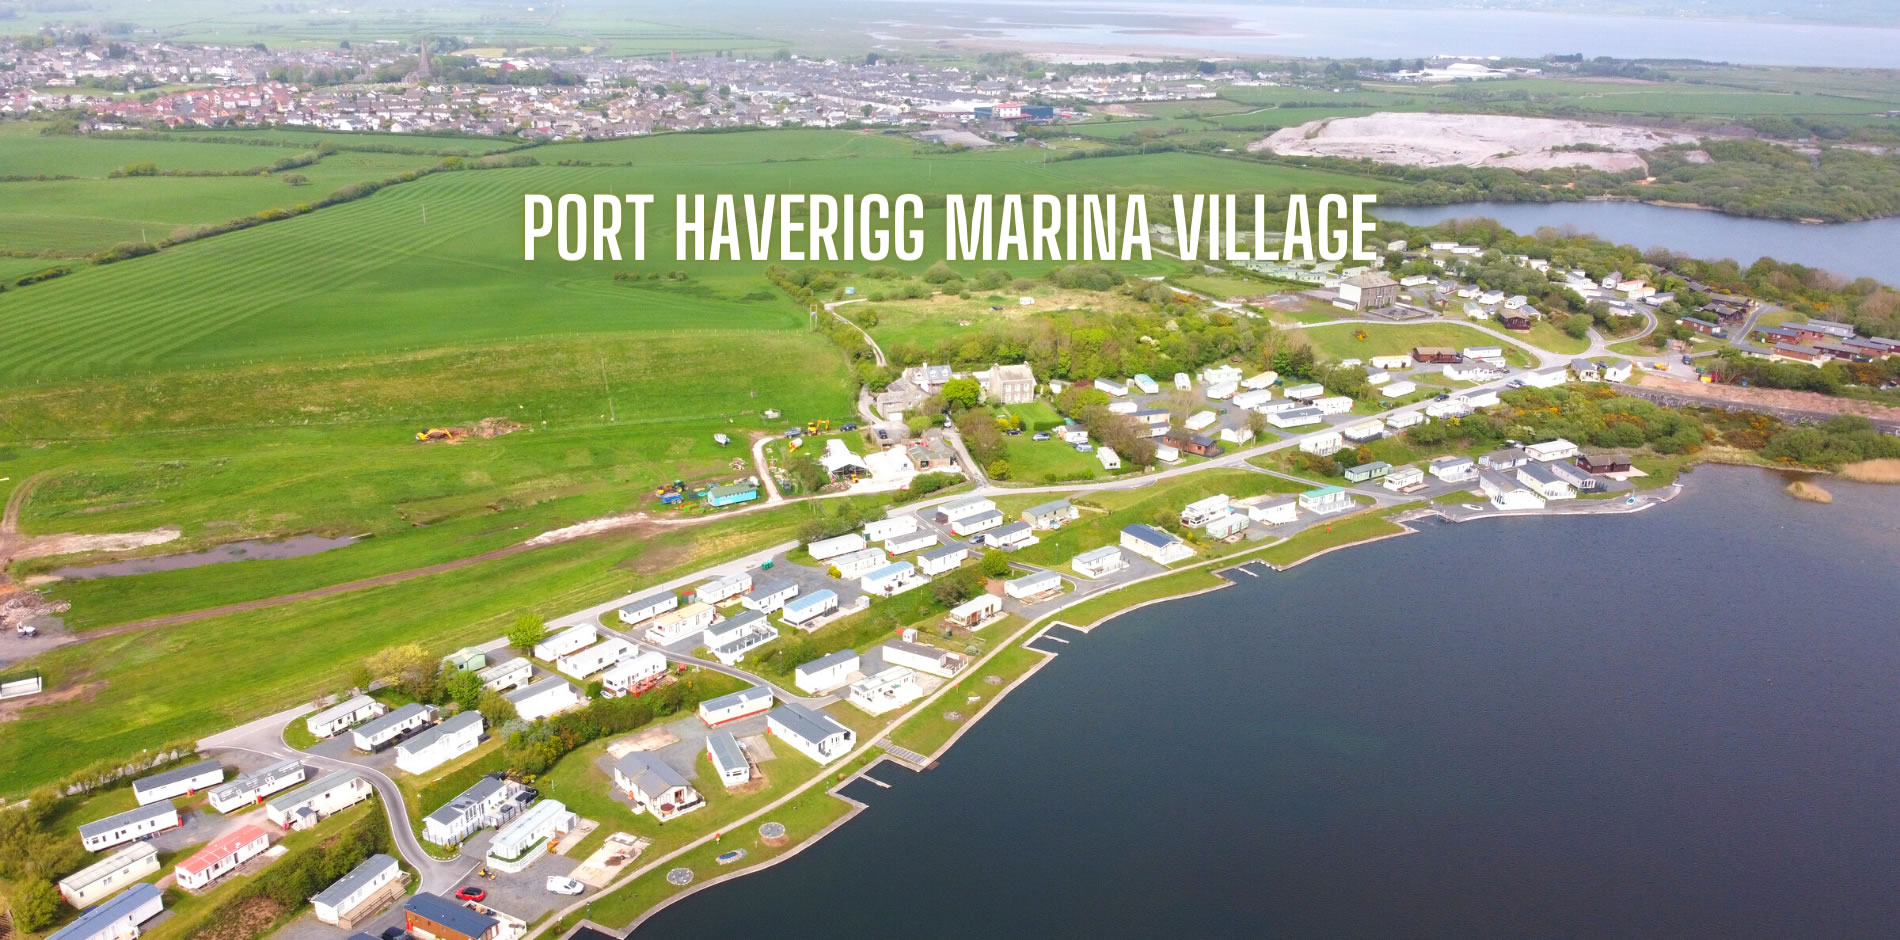 Port Haverigg Marina Village Homepage Carousel